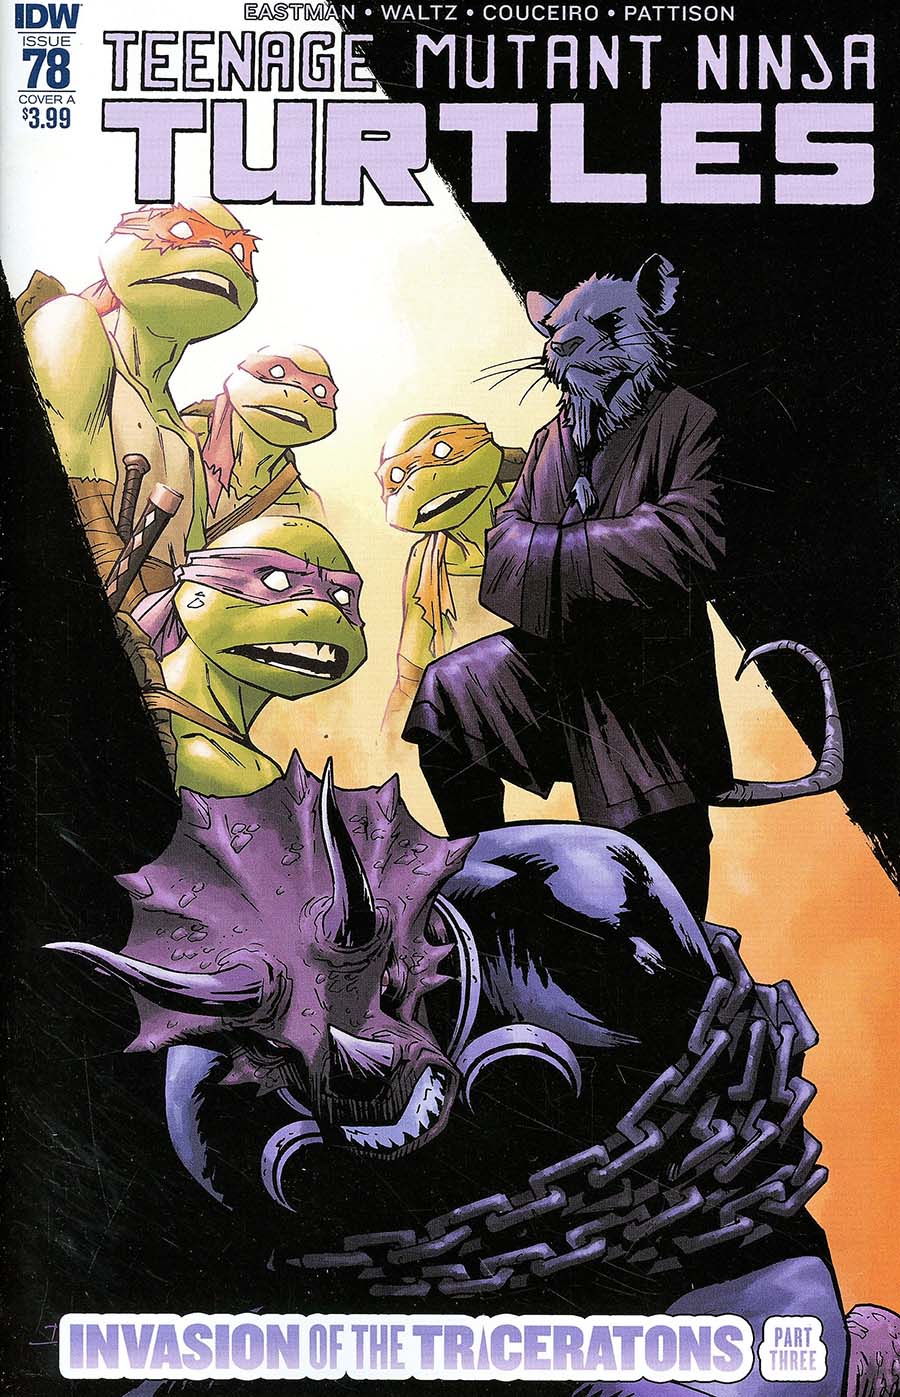 Teenage Mutant Ninja Turtles Vol 5 #78 Cover A Regular Damian Couceiro Cover